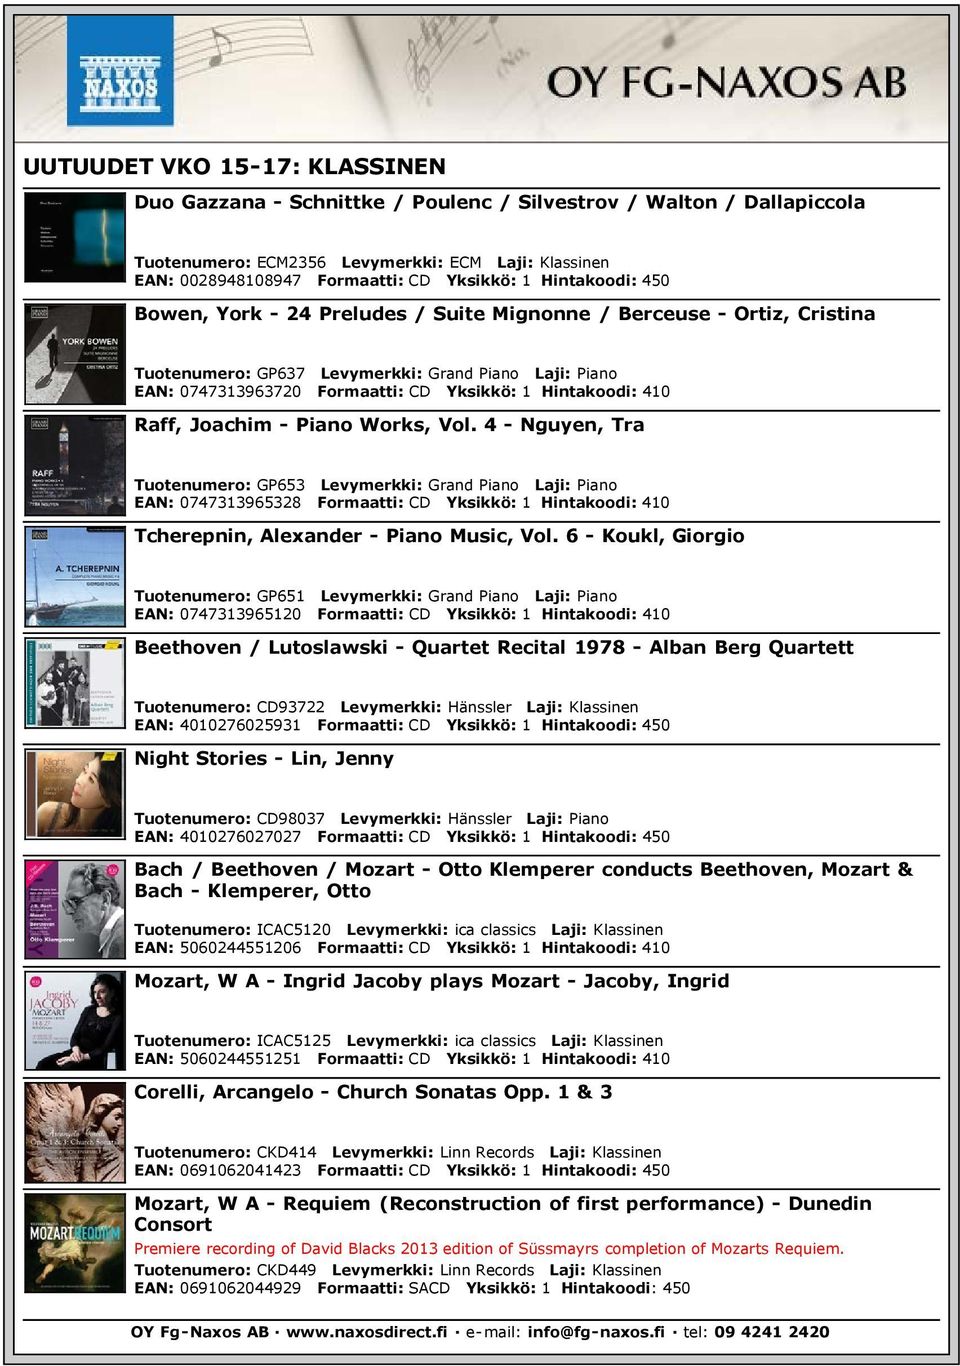 Works, Vol. 4 - Nguyen, Tra Tuotenumero: GP653 Levymerkki: Grand Piano Laji: Piano EAN: 0747313965328 Formaatti: CD Yksikkö: 1 Hintakoodi: 410 Tcherepnin, Alexander - Piano Music, Vol.